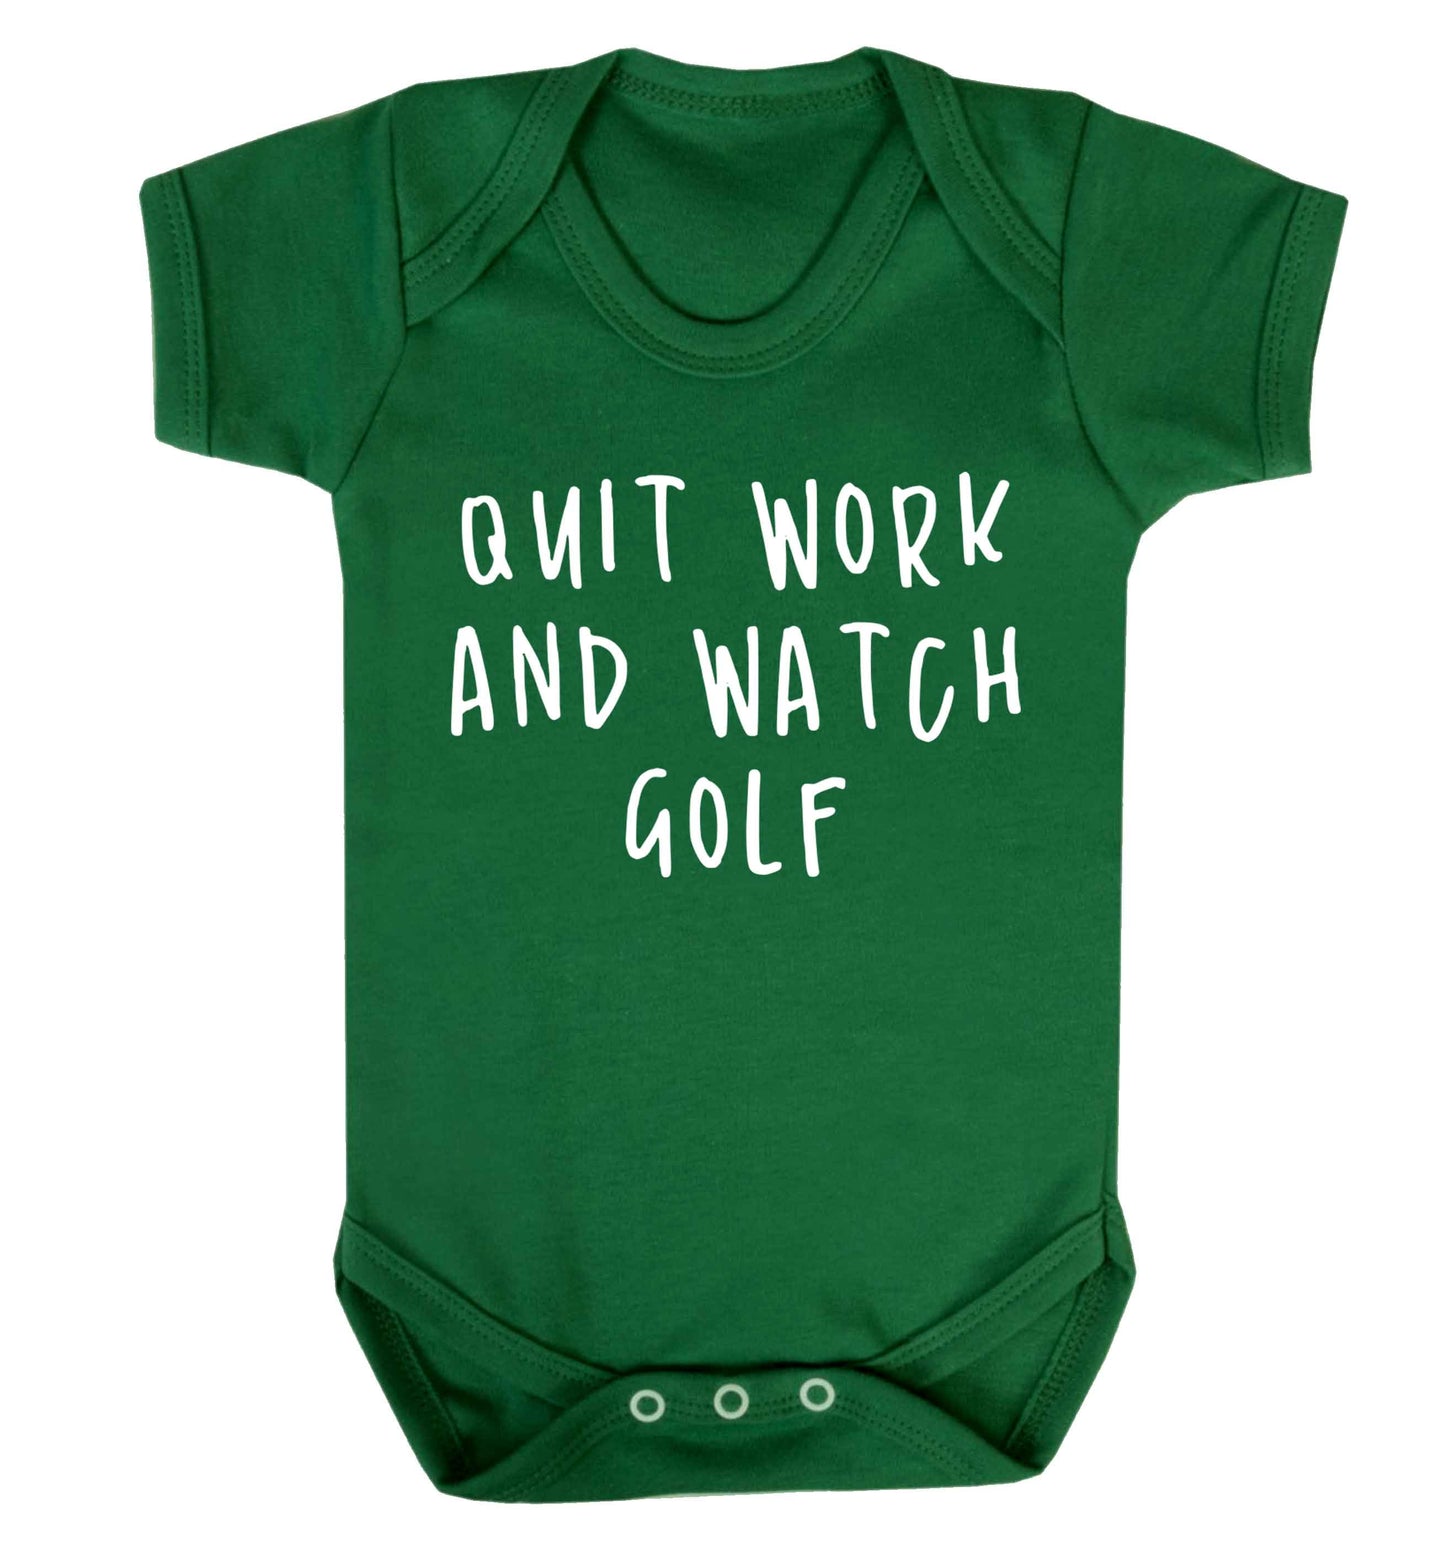 Quit work and watch golf Baby Vest green 18-24 months